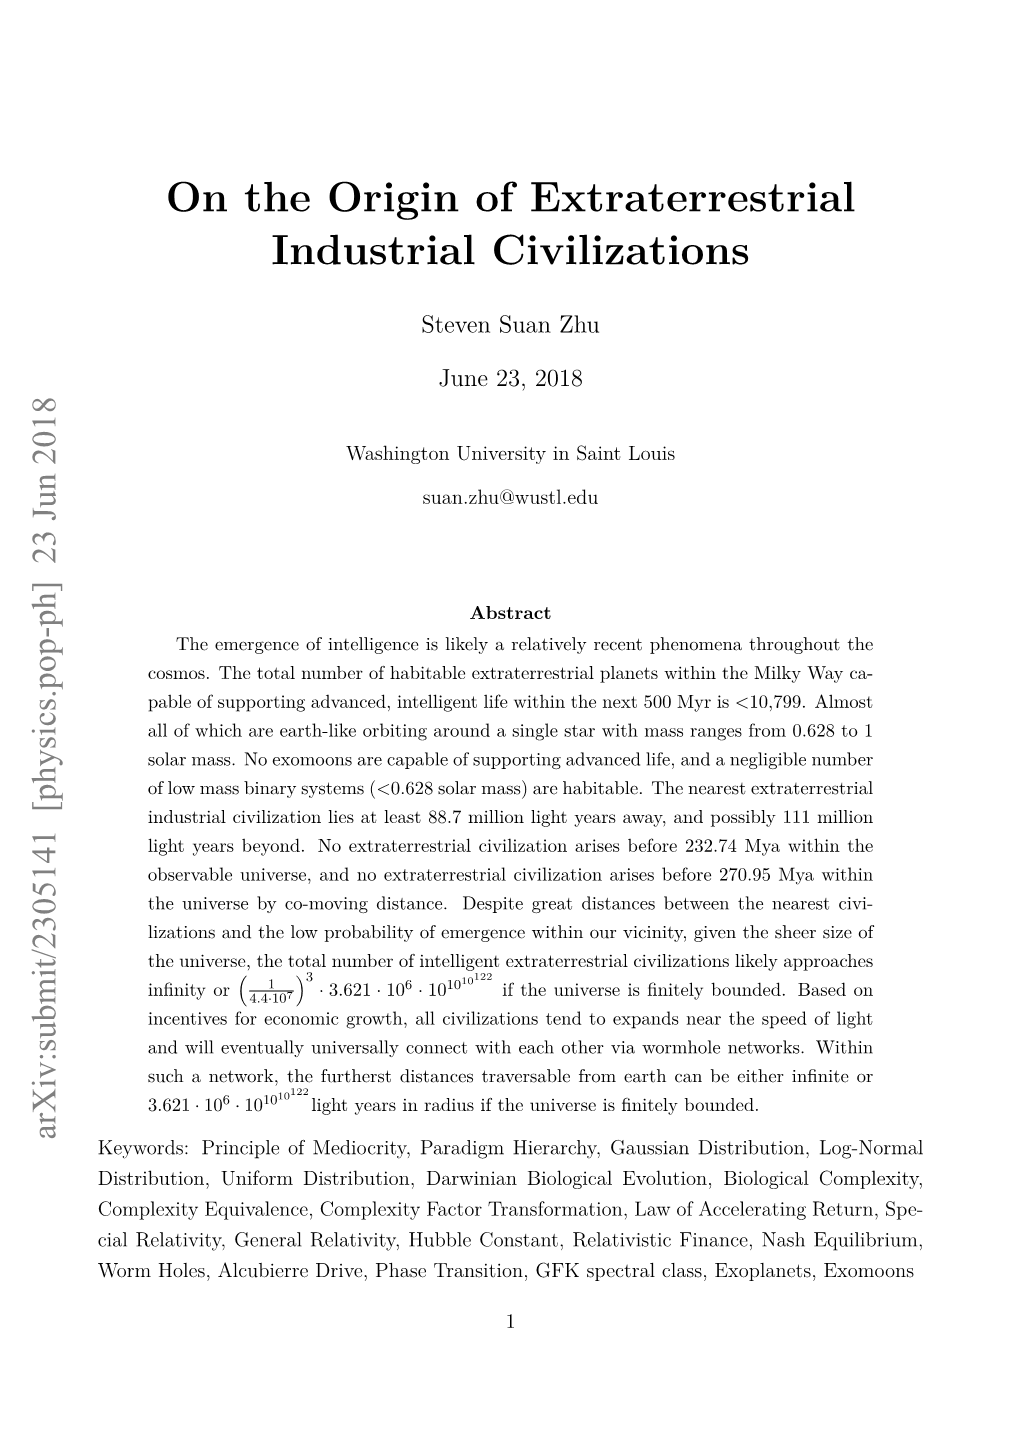 On the Origin of Extraterrestrial Industrial Civilizations